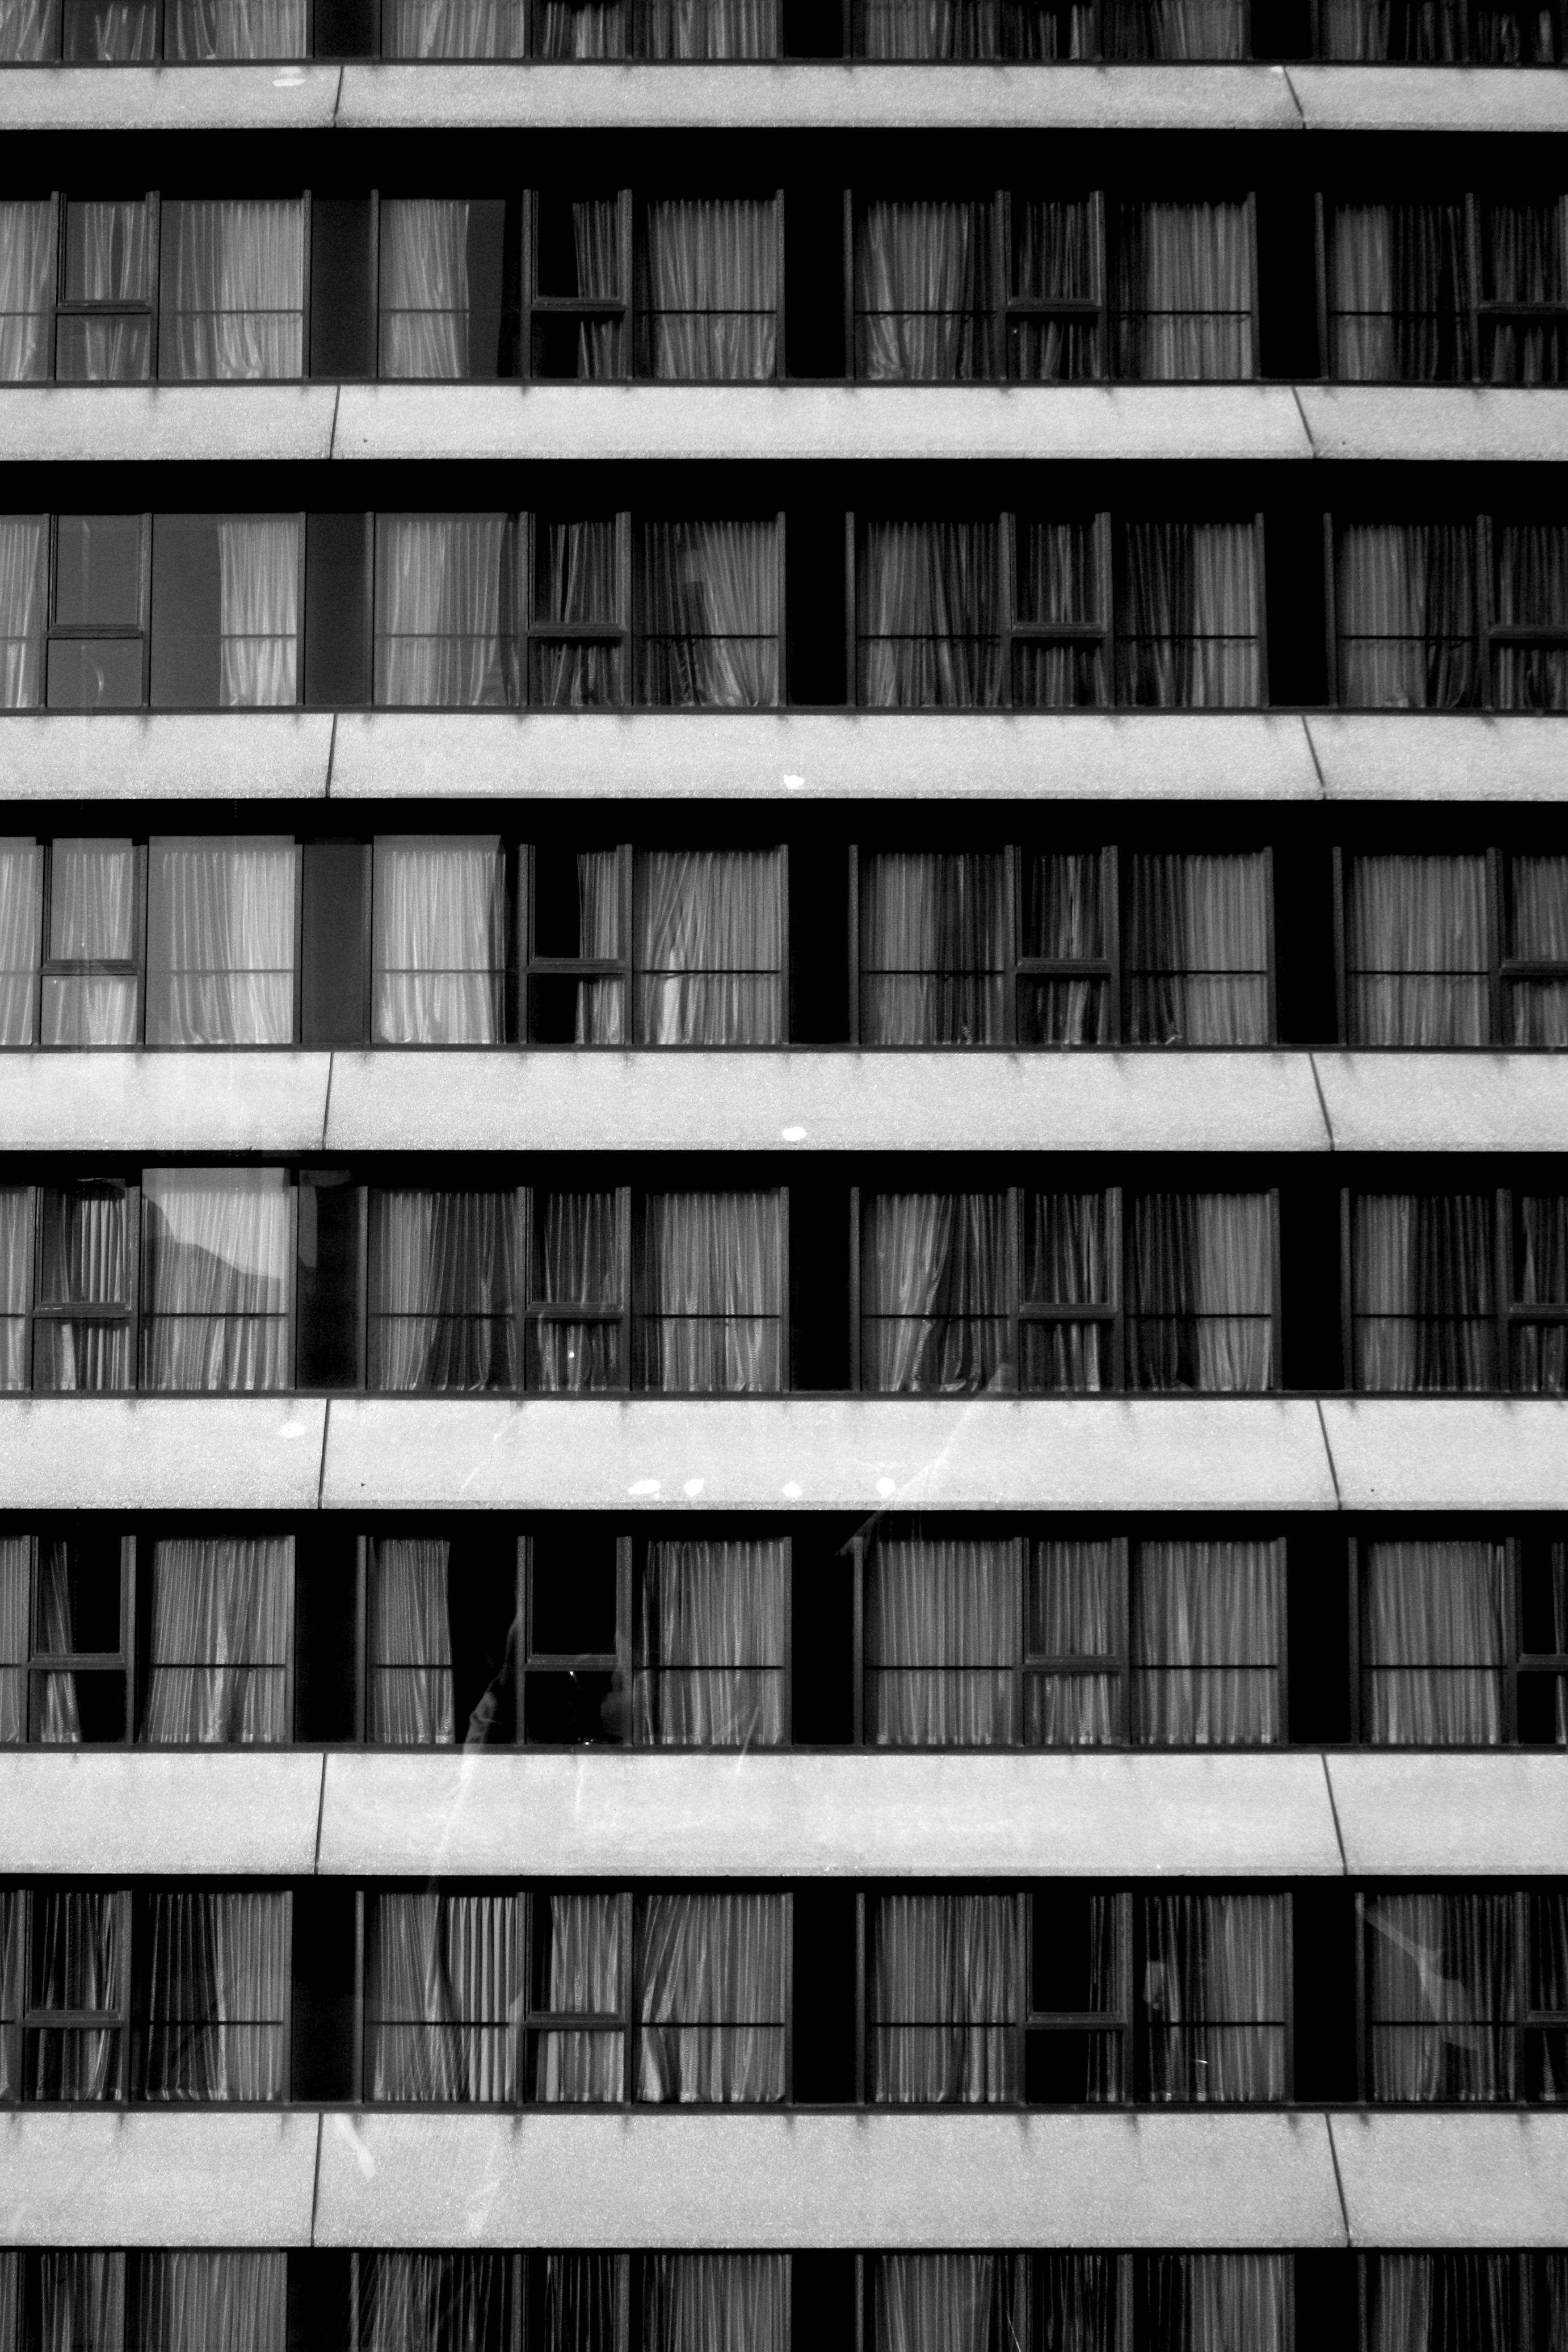 White Curtains on Window \u00b7 Free Stock Photo